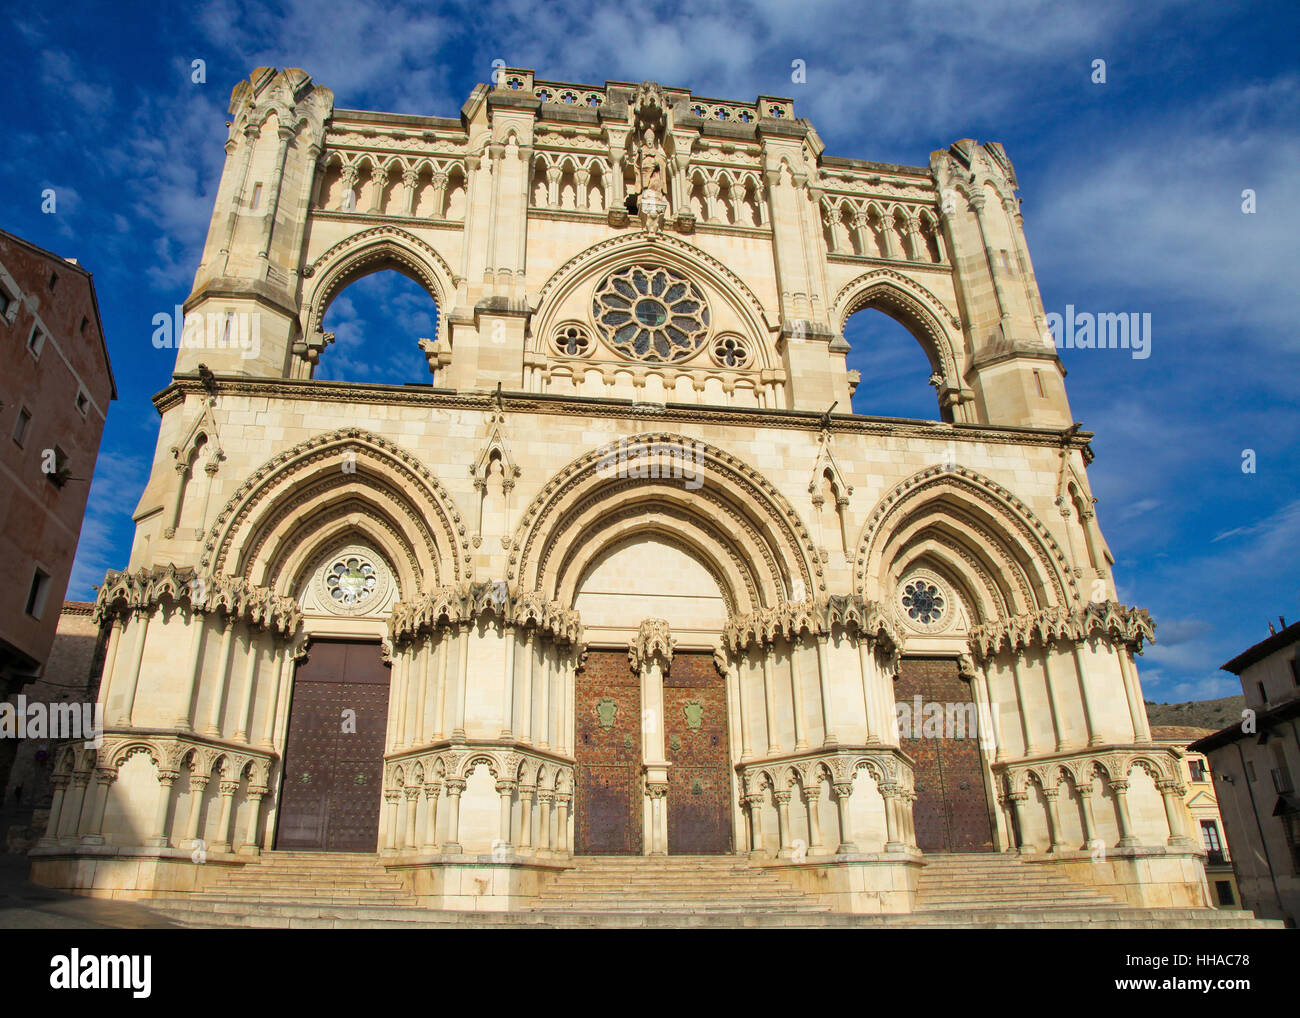 Cathedrale Espagne Espagnol Monument Eglise Voyage Ville Ville Cathedrale Photo Stock Alamy